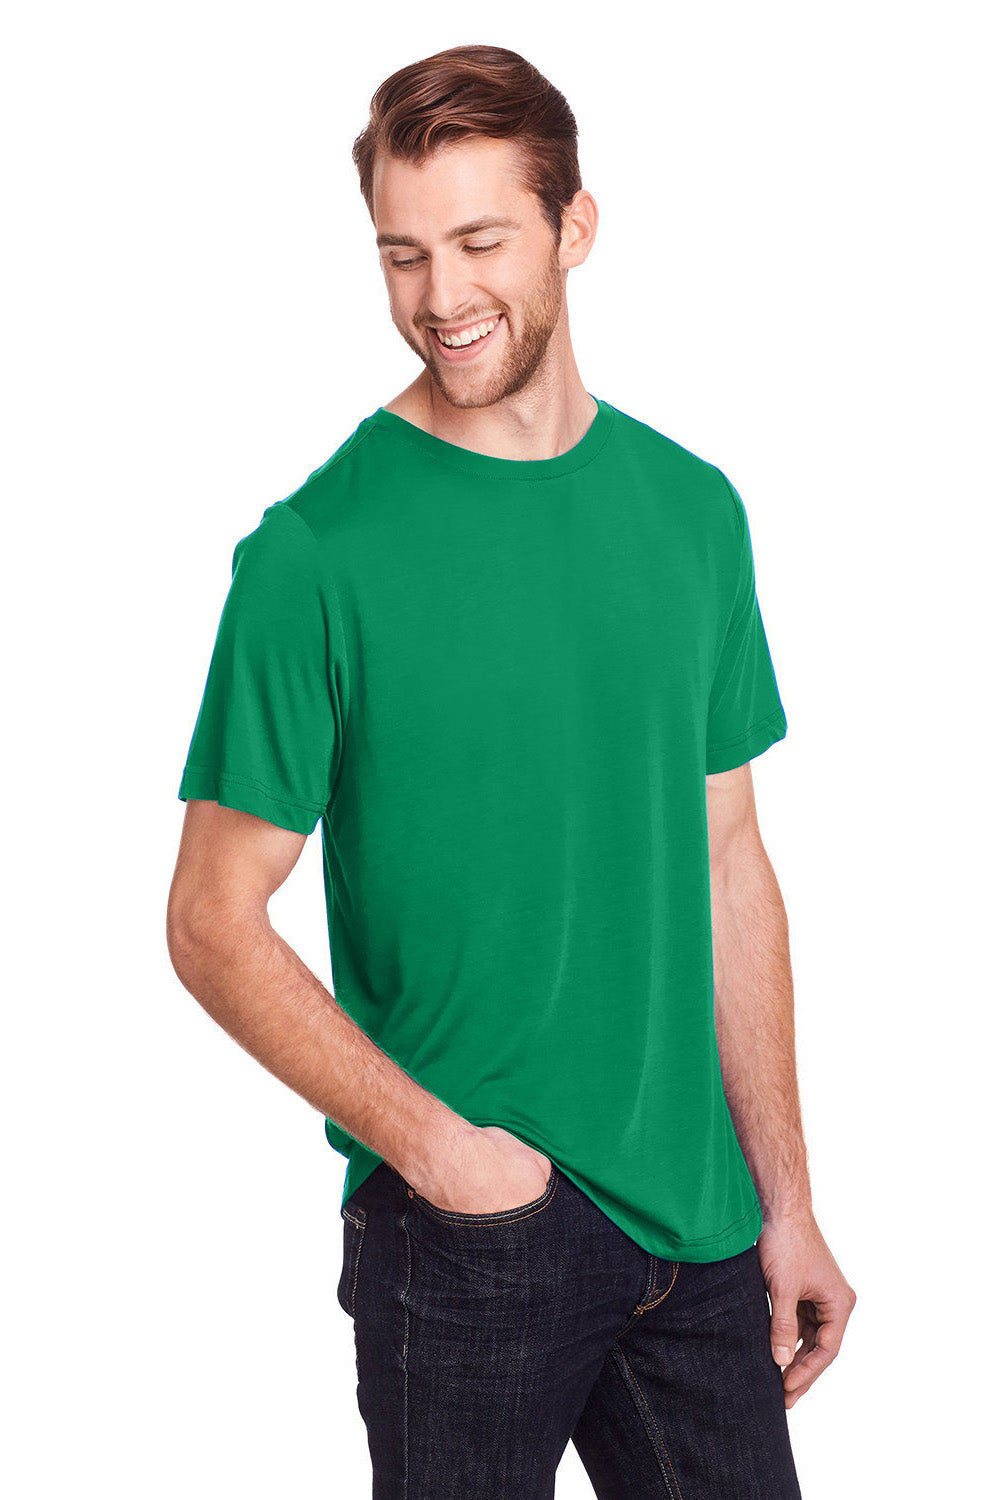 Core 365 CE111 Mens Fusion ChromaSoft Performance Moisture Wicking Short Sleeve Crewneck T-Shirt Kelly Green 3Q